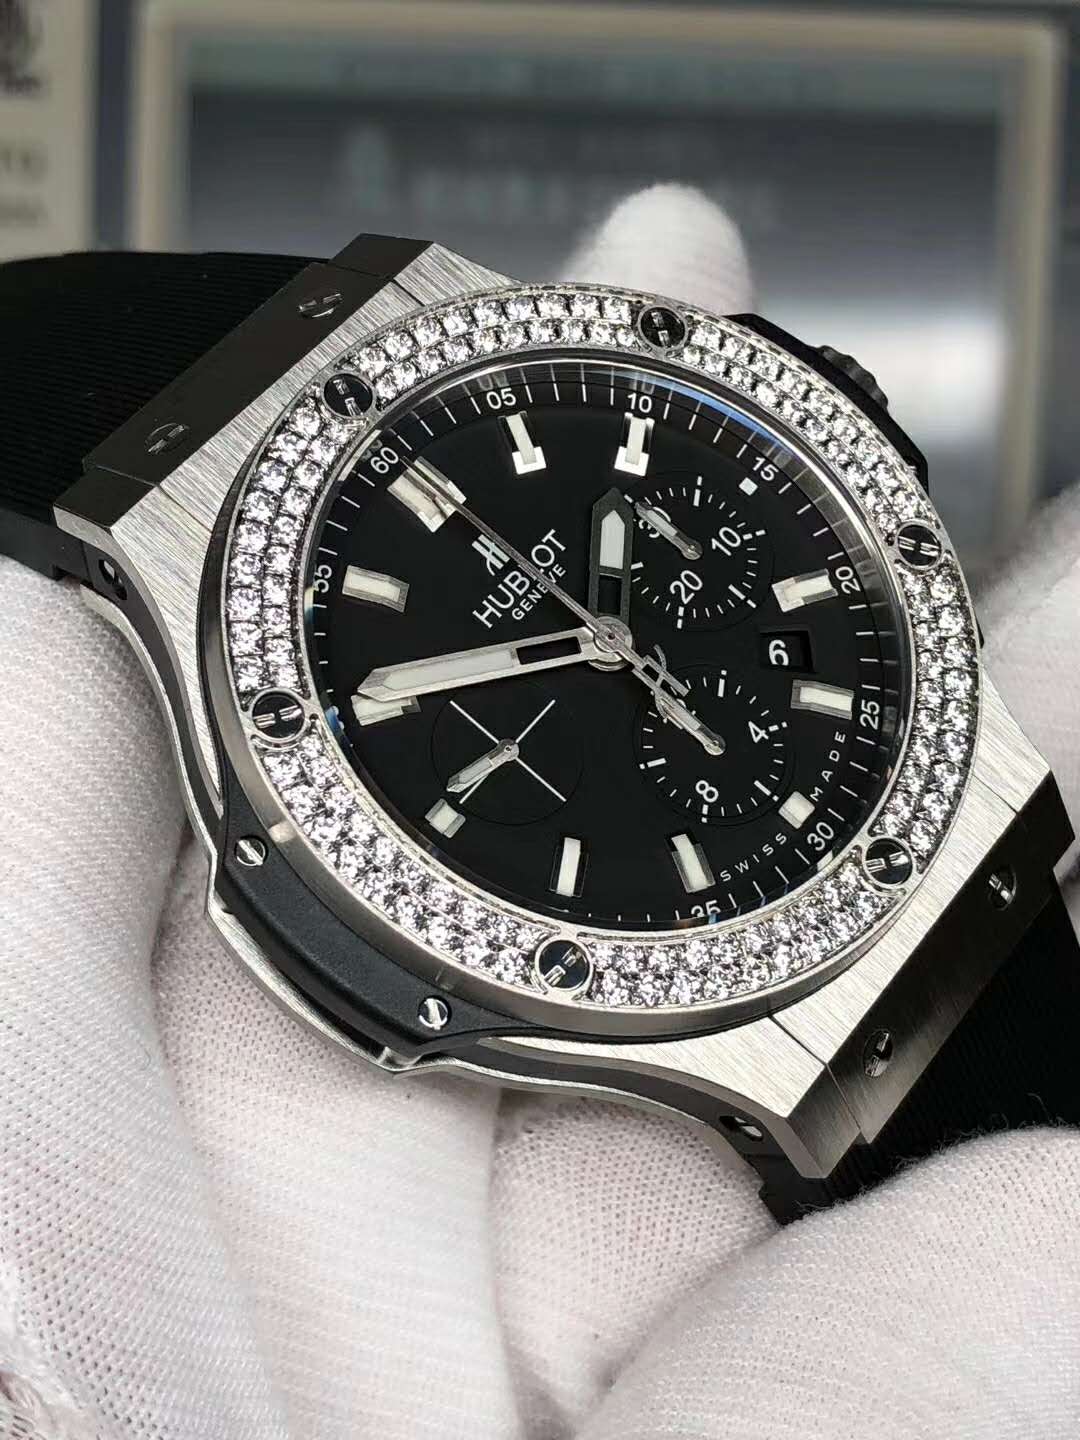 A Hublot Big Bang diamond watch I like – Hot Spot on Replica Watches ...